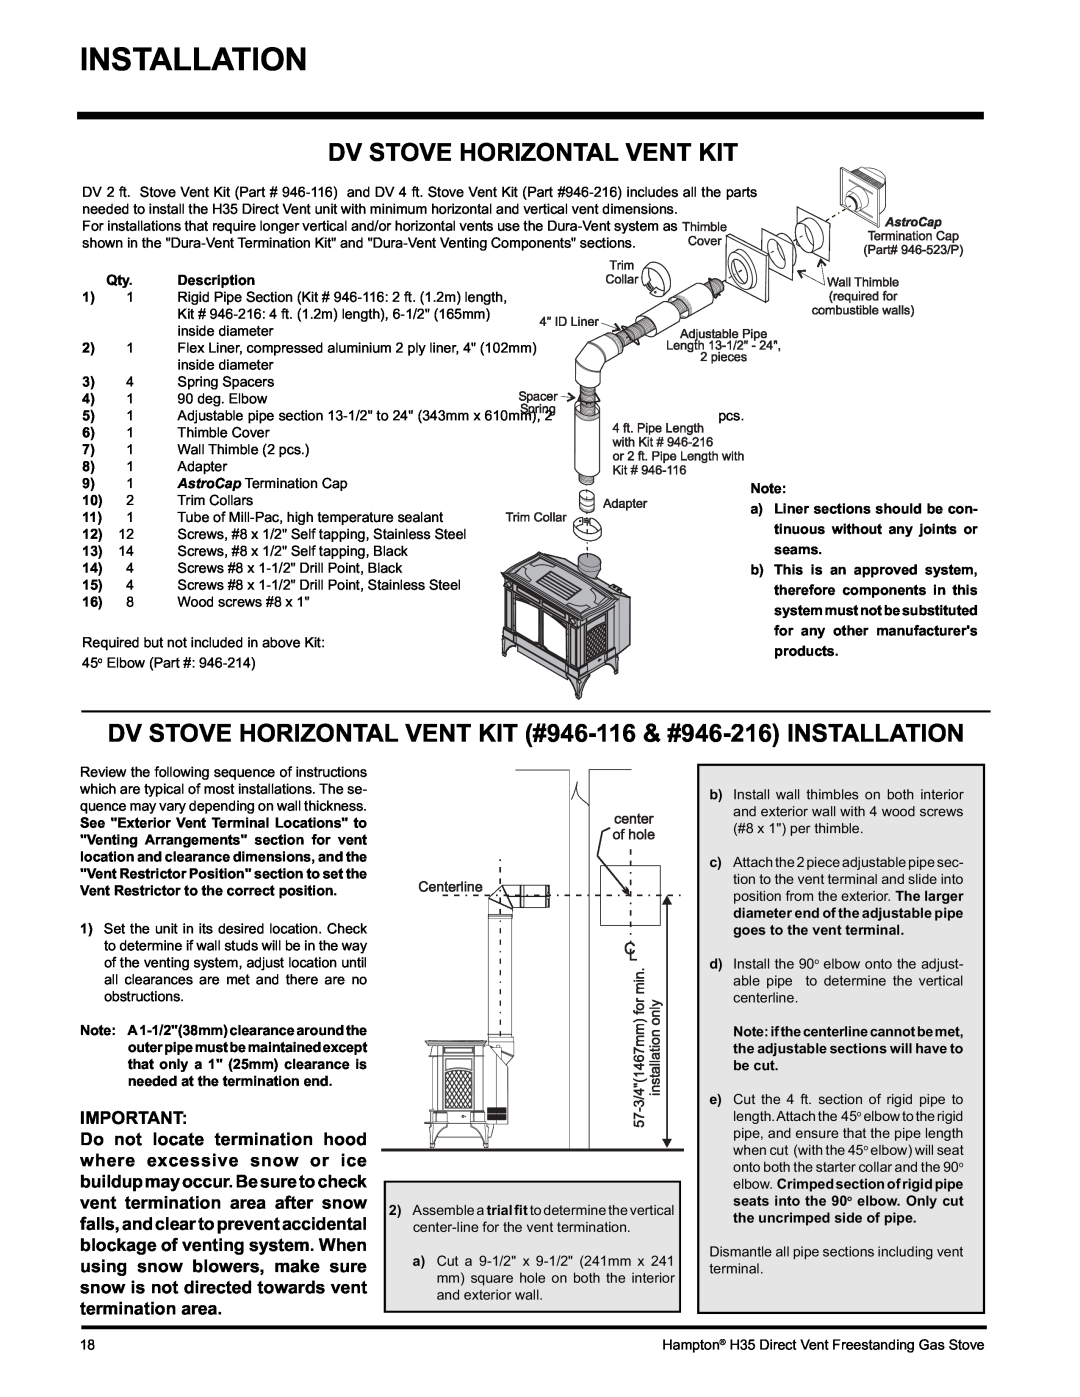 Hampton Direct H35-NG1, H35-LP1 installation manual Installation, Dv Stove Horizontal Vent Kit, Description 